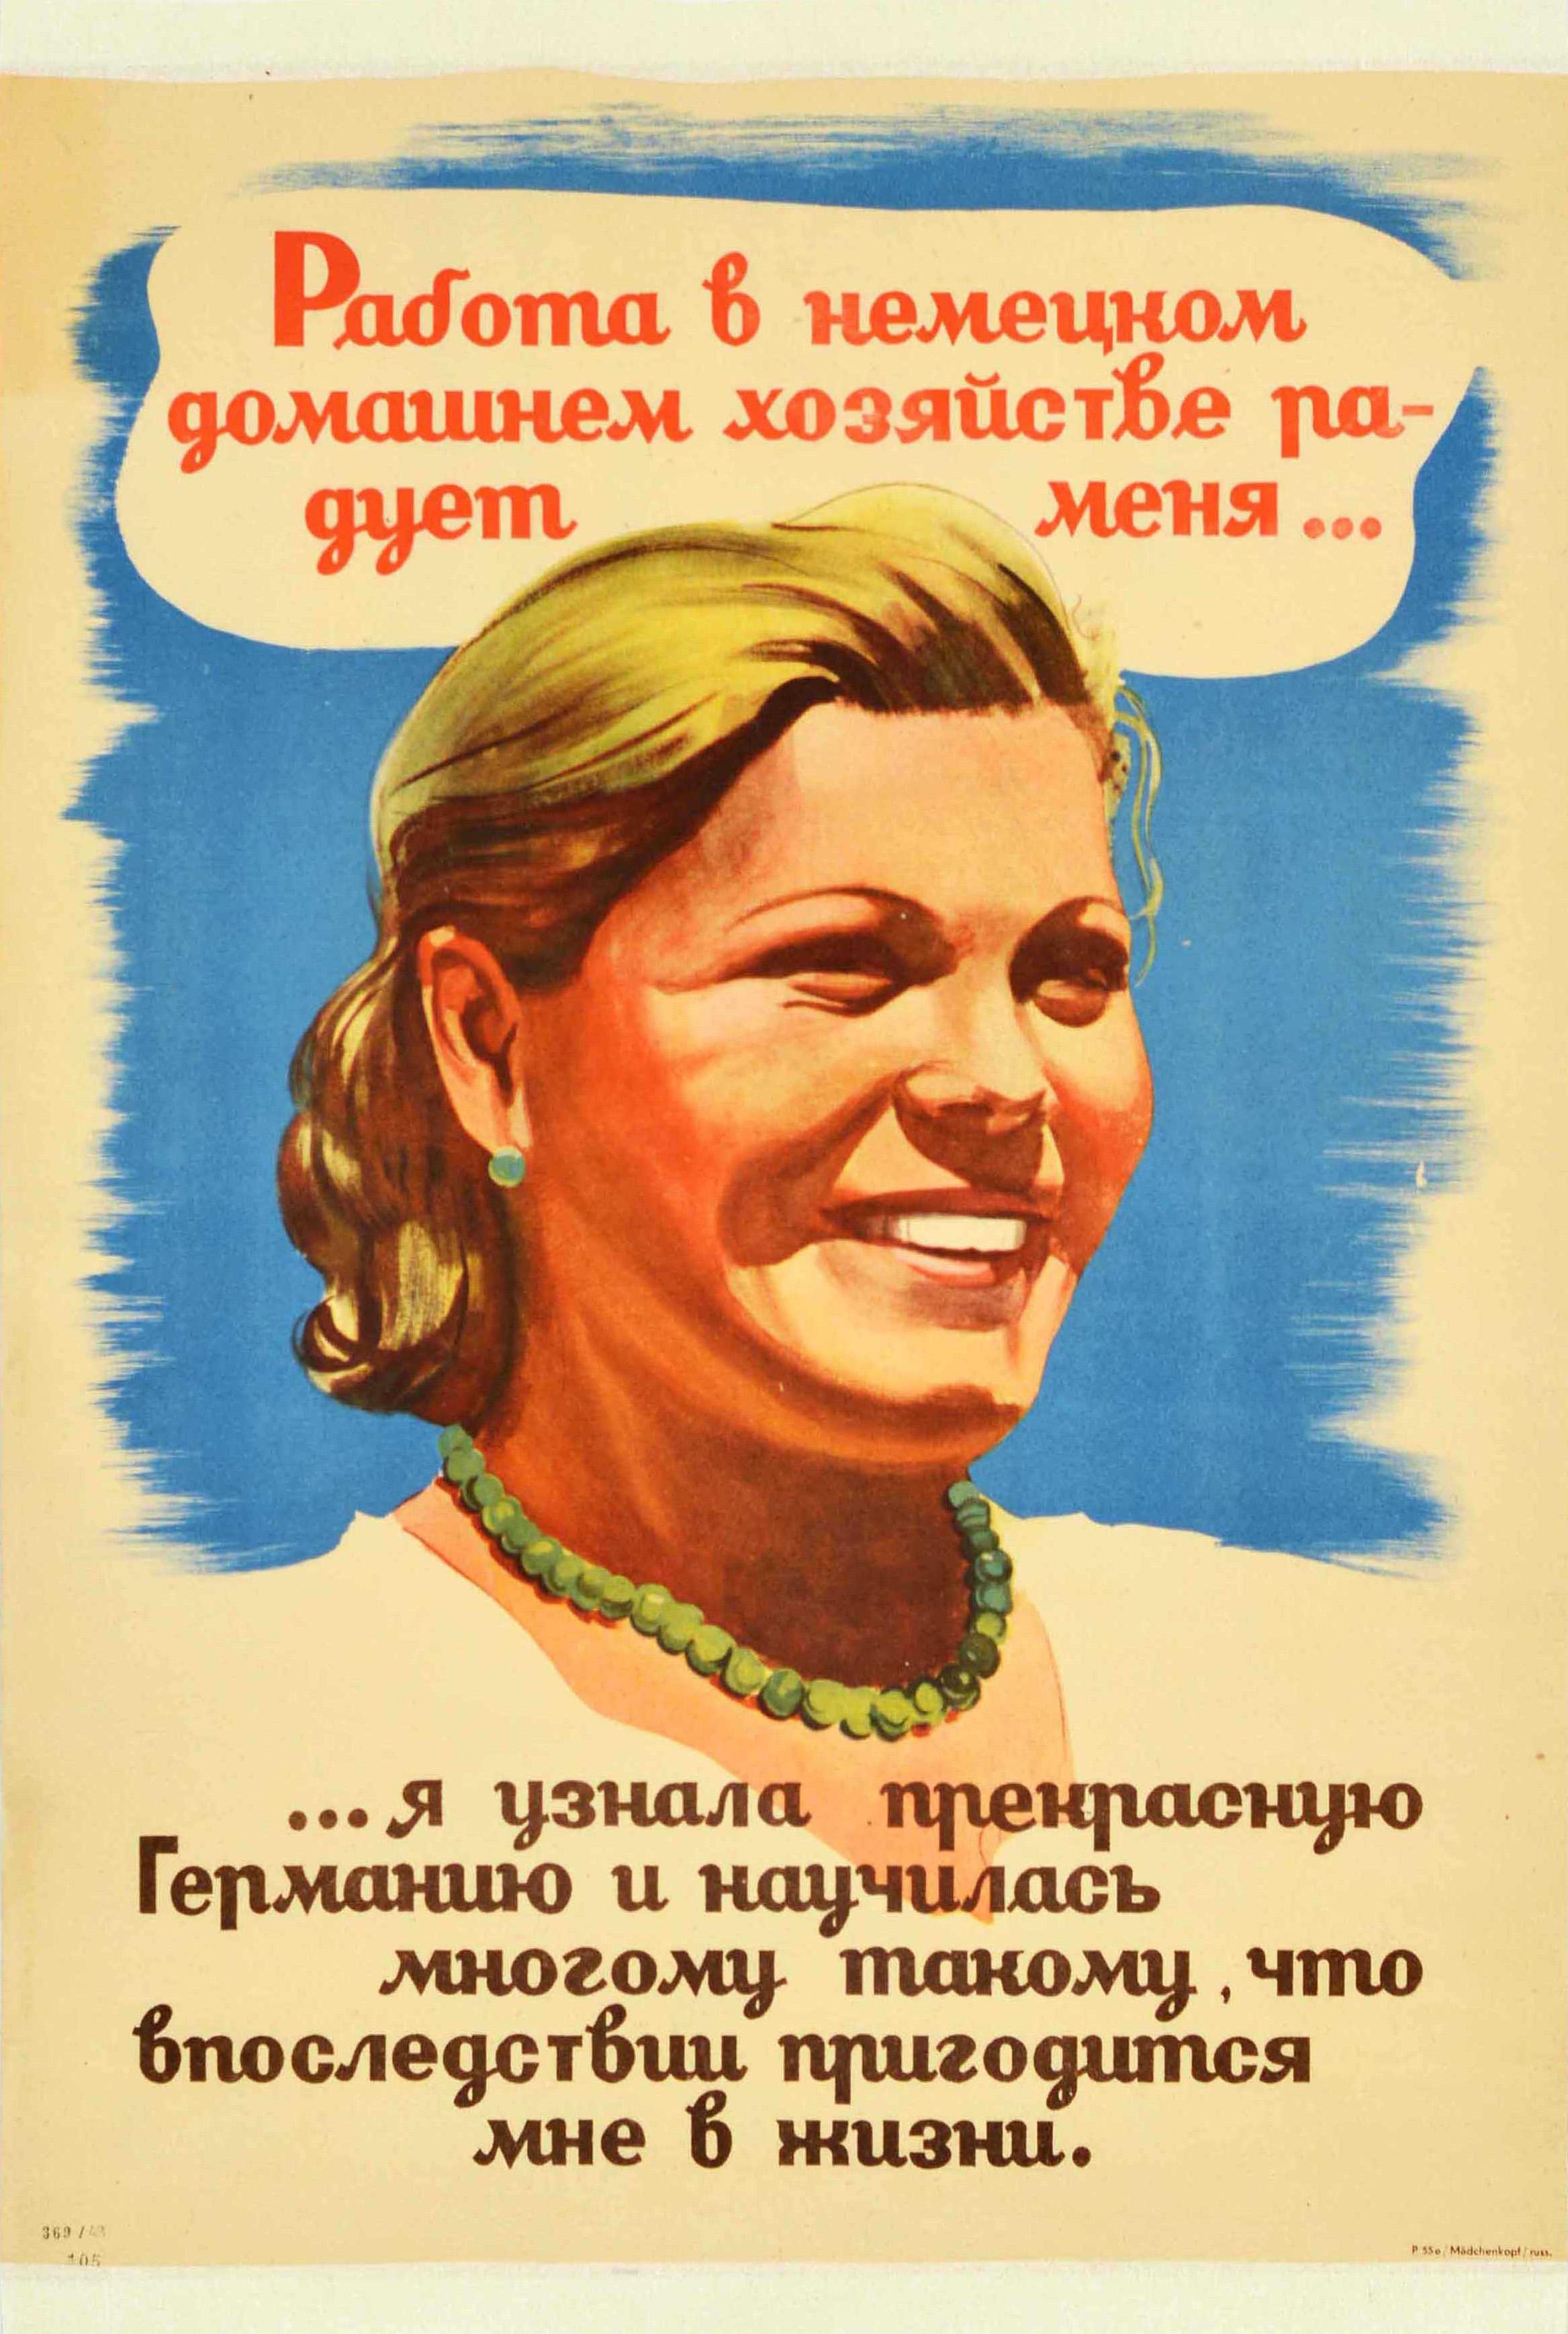 Unknown Print - Original Vintage WWII Poster Anti-Soviet German Propaganda Happy To Work Germany